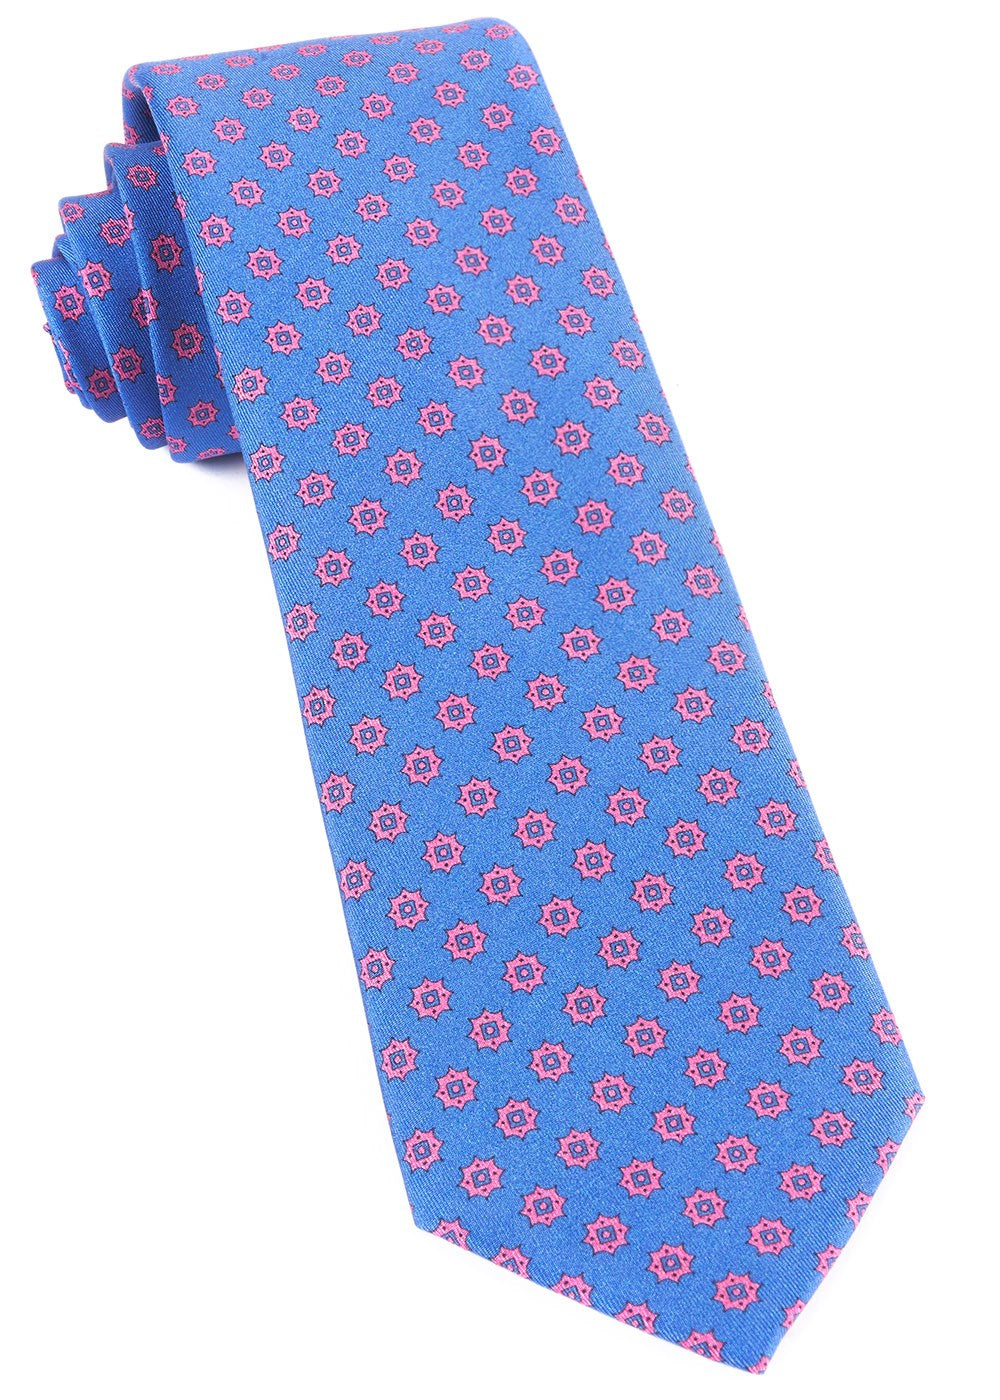 Major Star Serene Blue Tie by Tie Bar